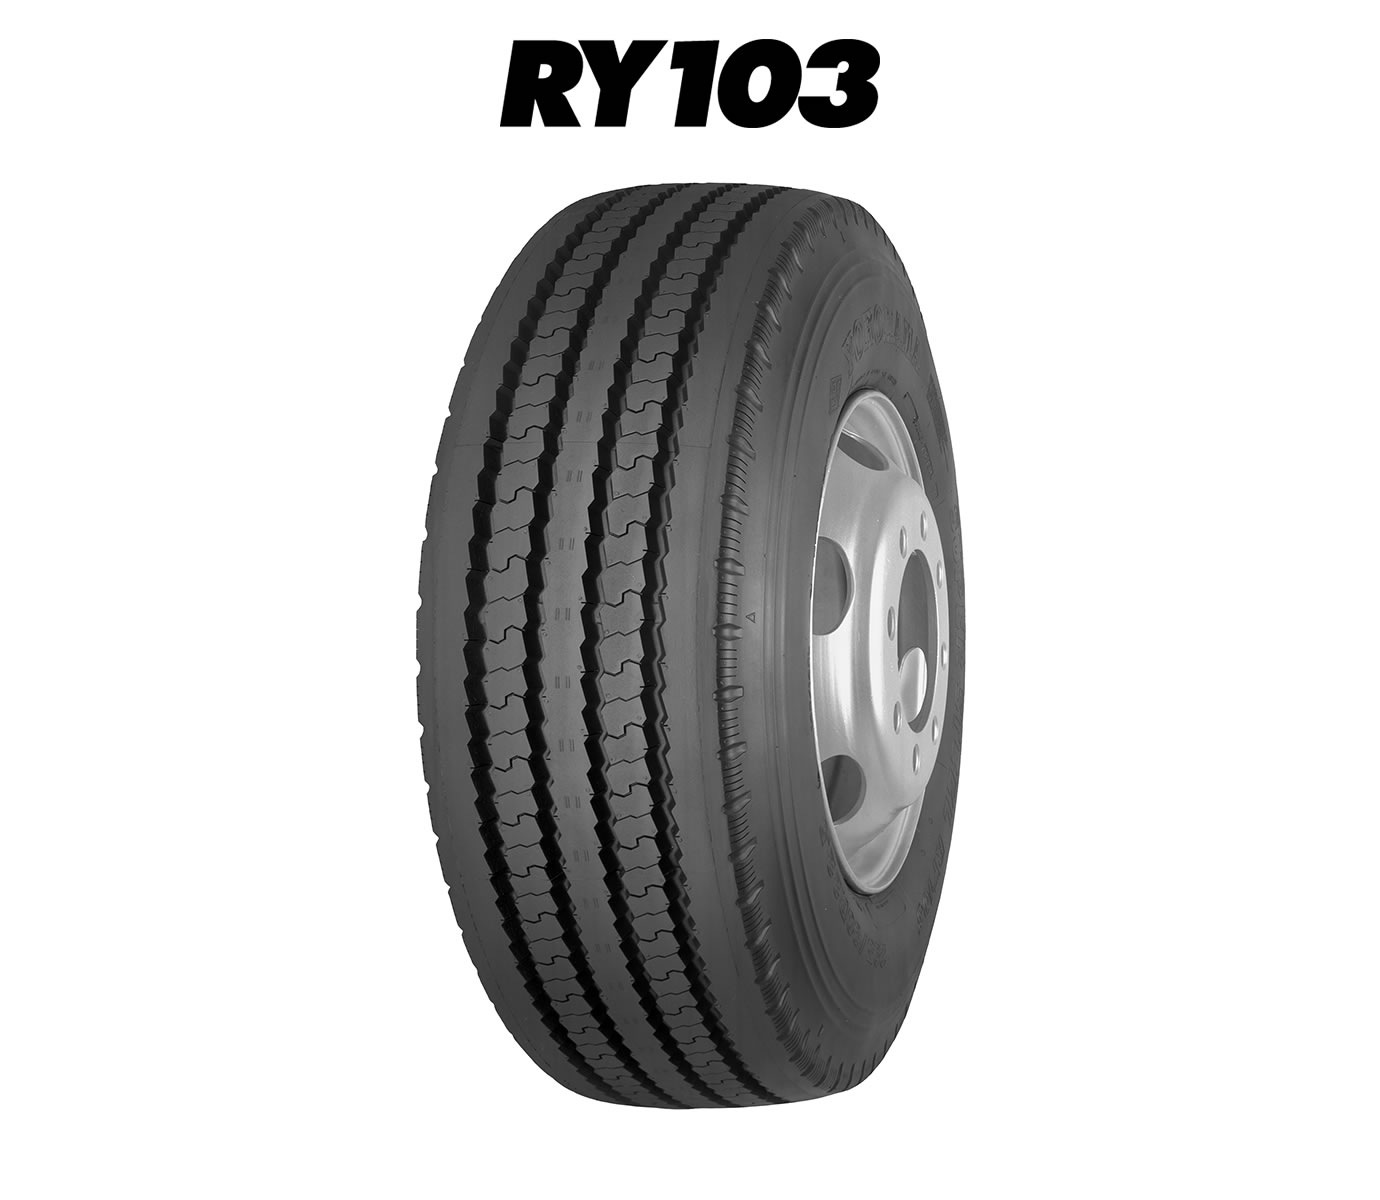 RY103